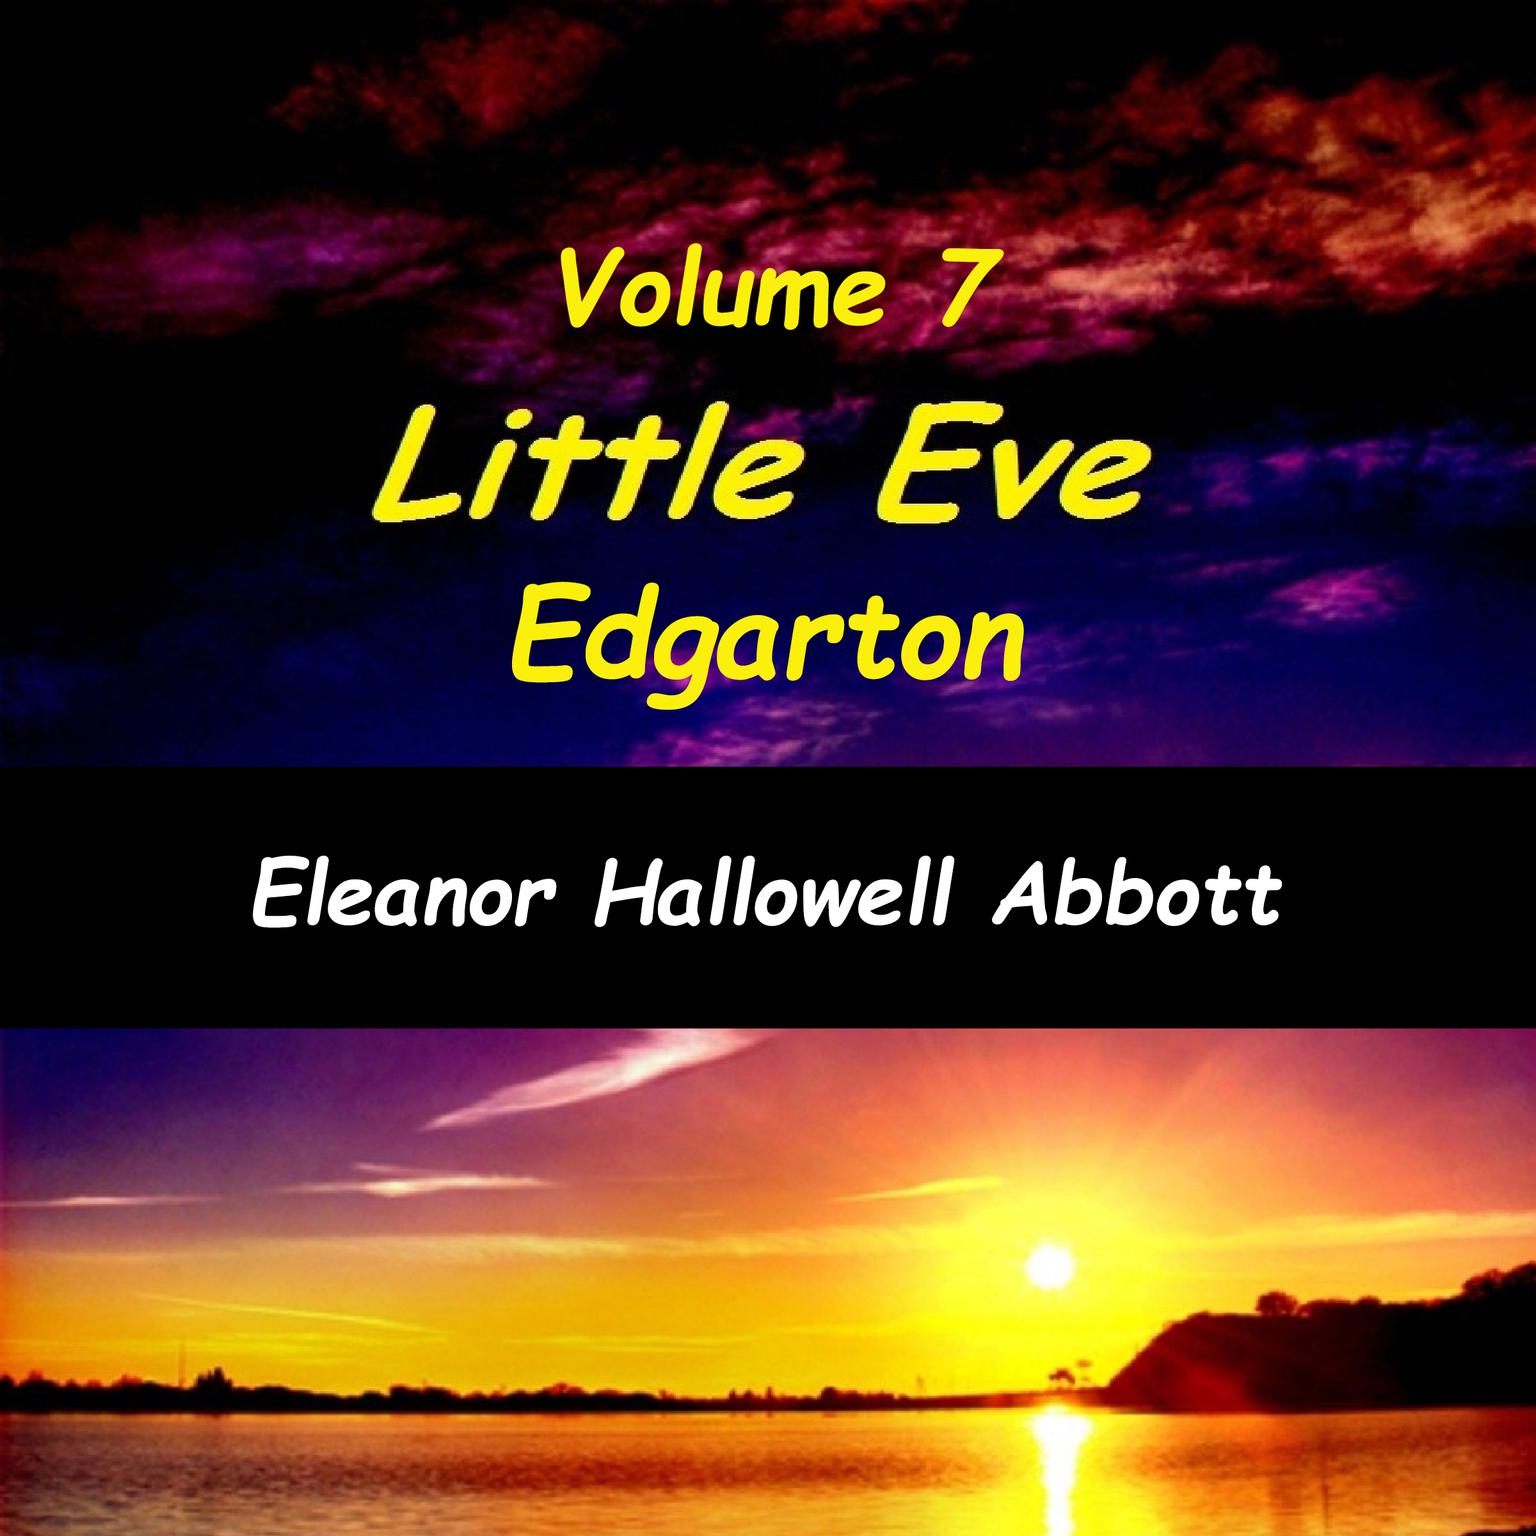 Little Eve Edgarton Volume 7 (Abridged) Audiobook, by Eleanor Hallowell Abbott